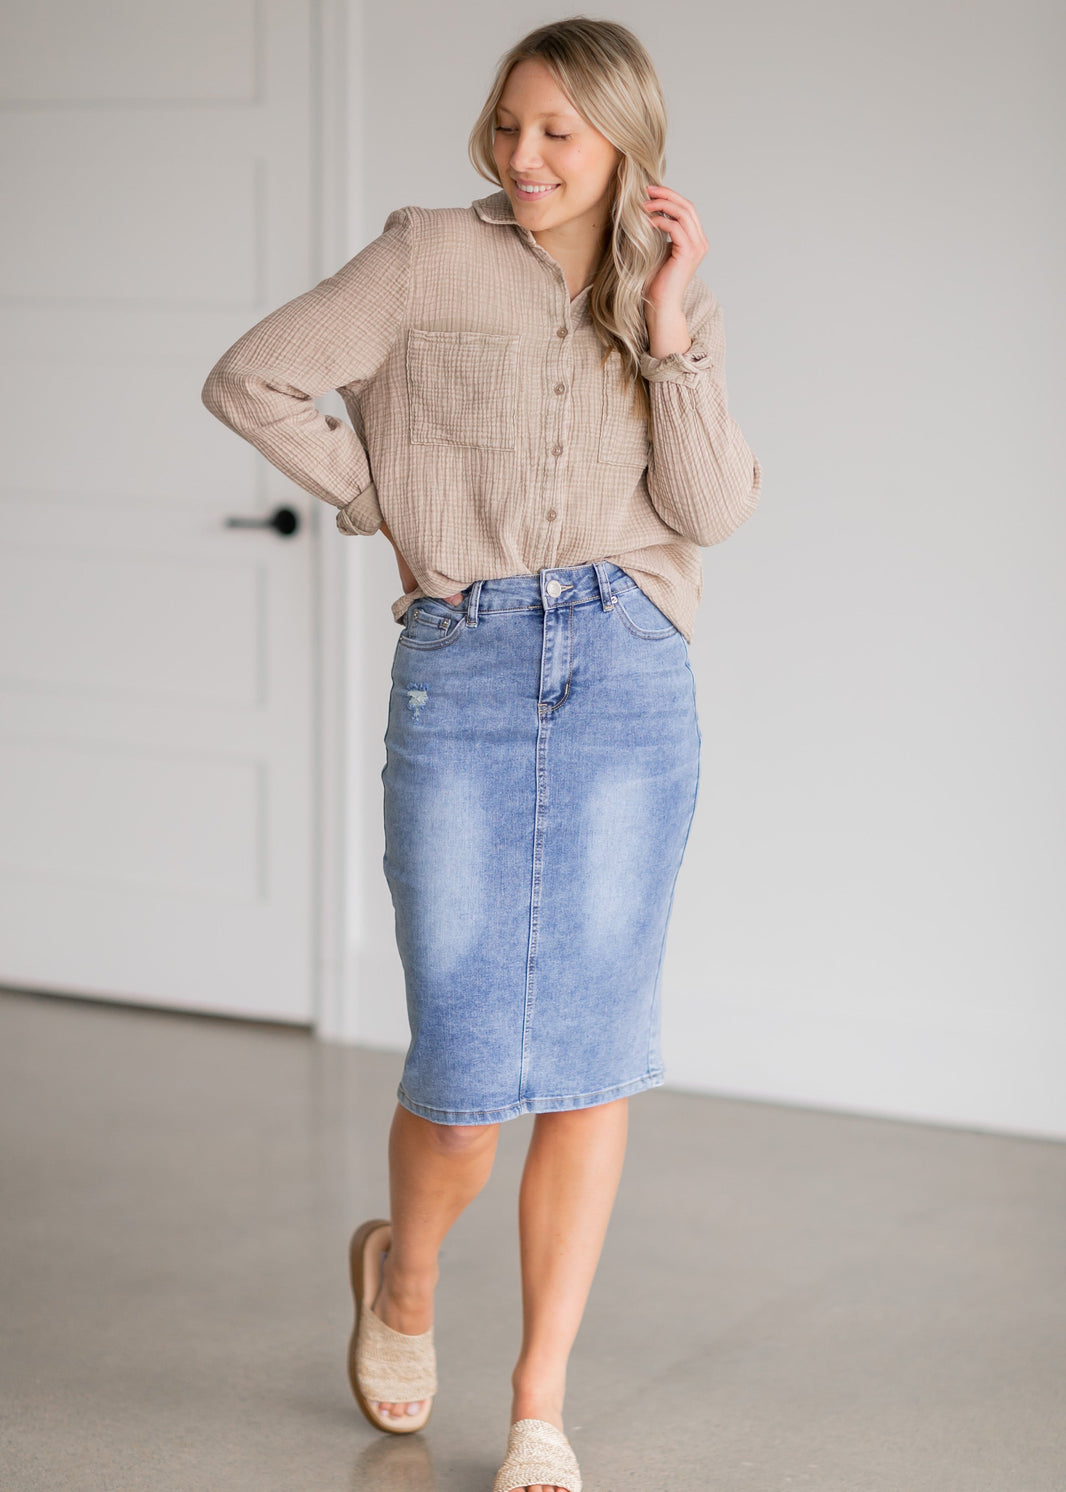 Shop Ladies Long Denim Skirts | Button Front, A-Line, High Rise – Page ...